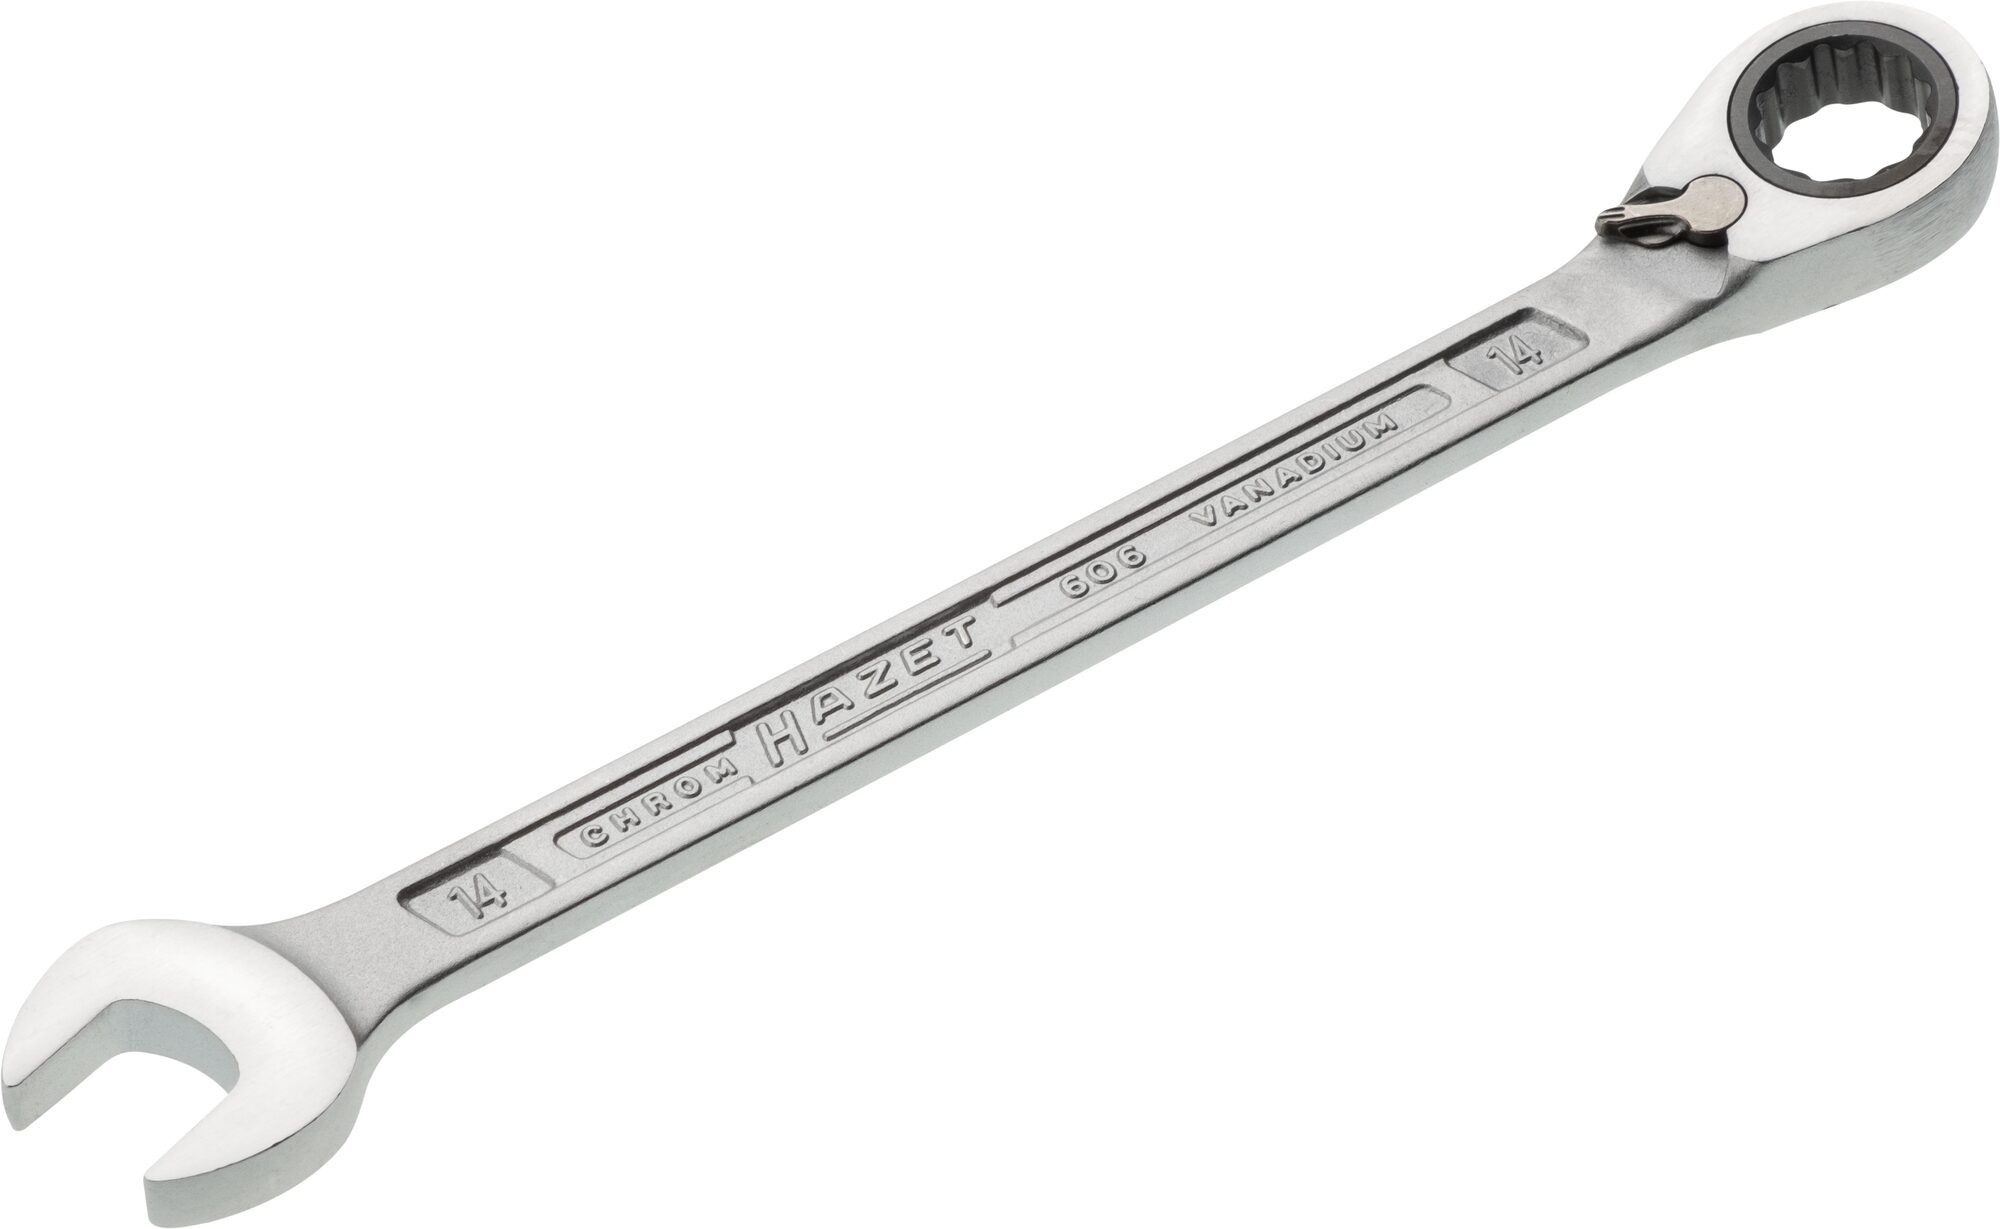 HAZET Knarren Ring-Maulschlüssel 606-14 · Außen Doppel-Sechskant-Tractionsprofil · 14 mm